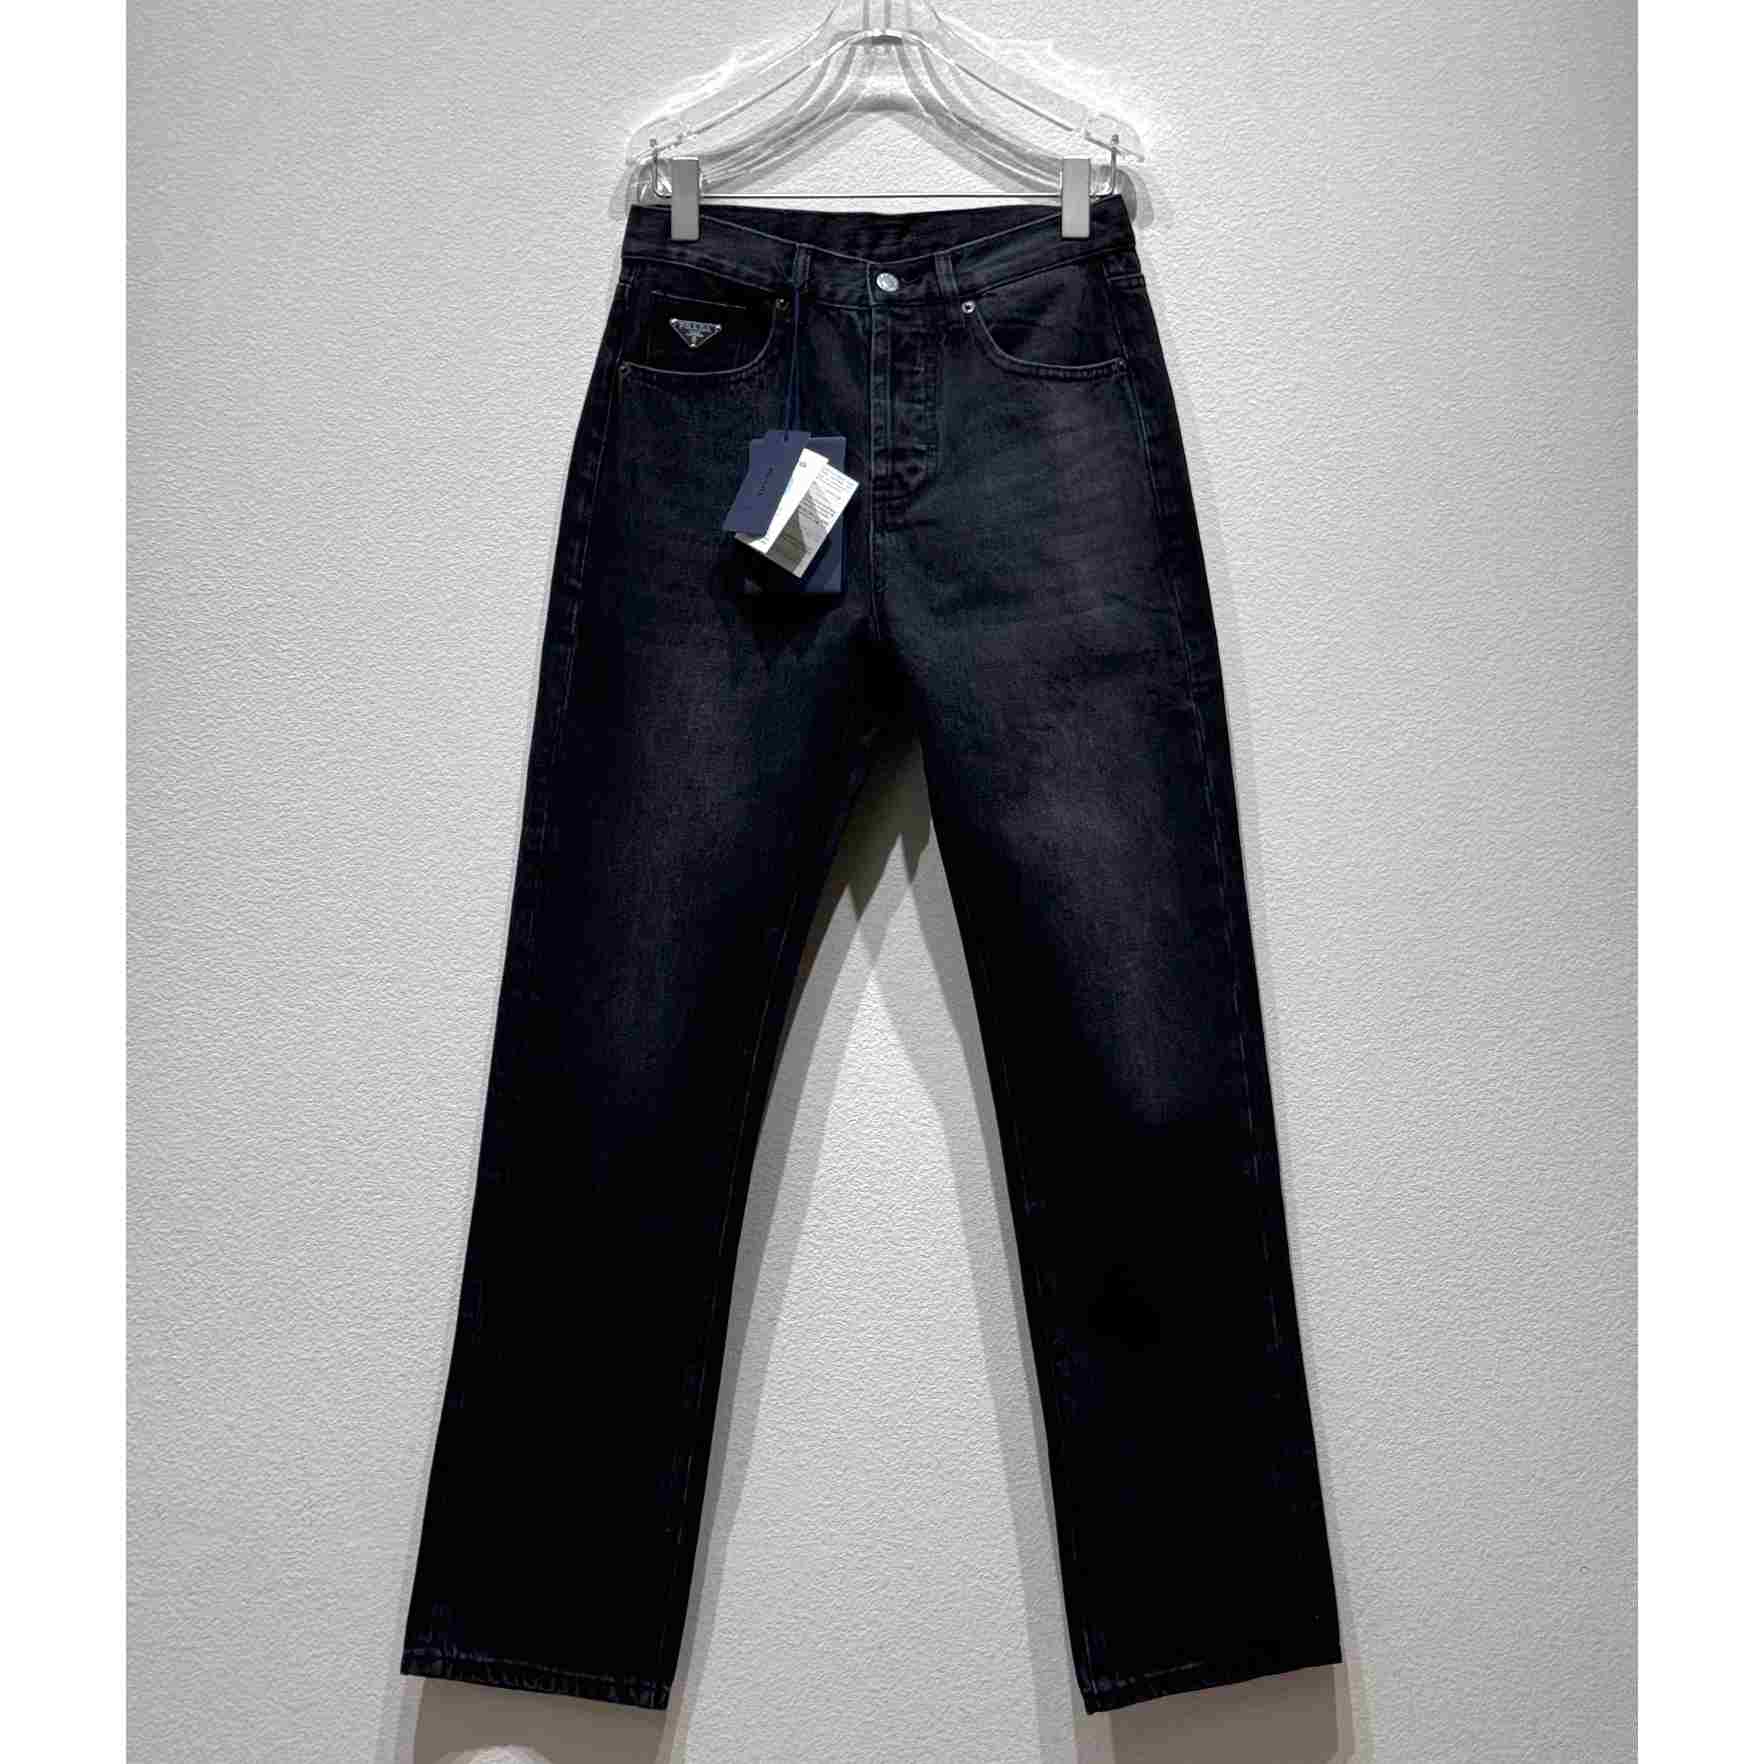 Prada Jeans - everydesigner